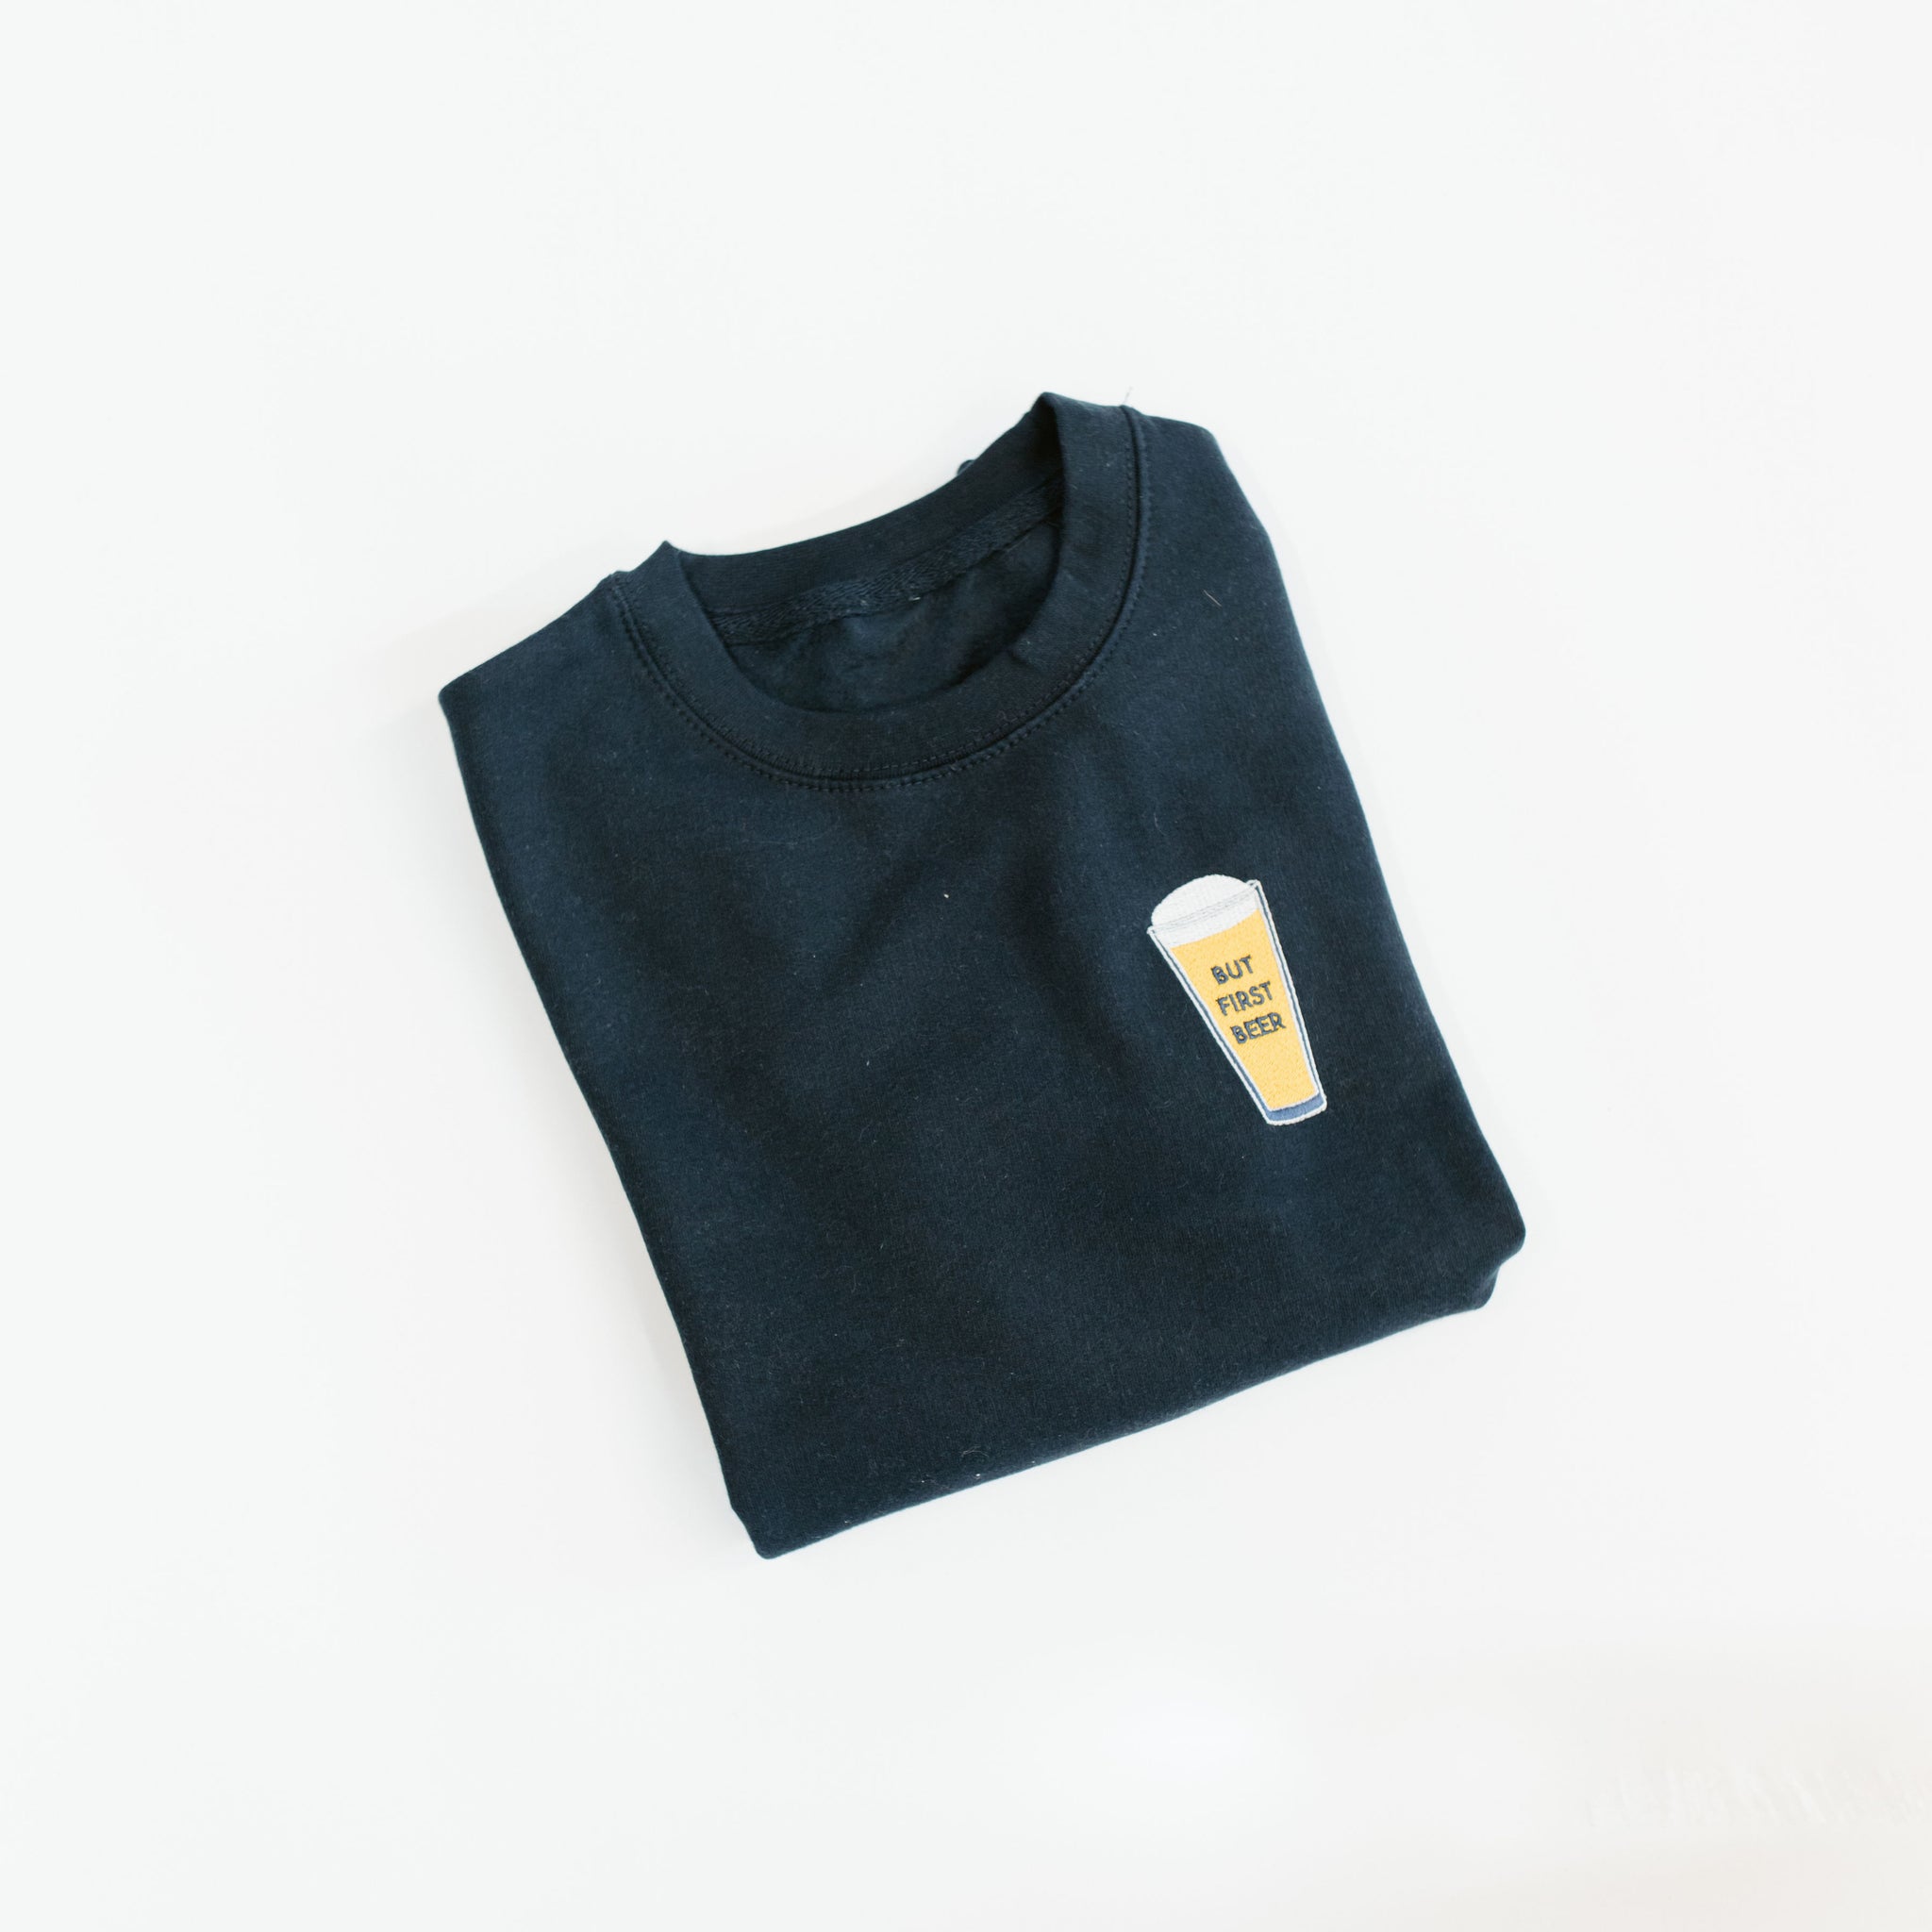 Beer Glass Sweatshirt or T-shirt